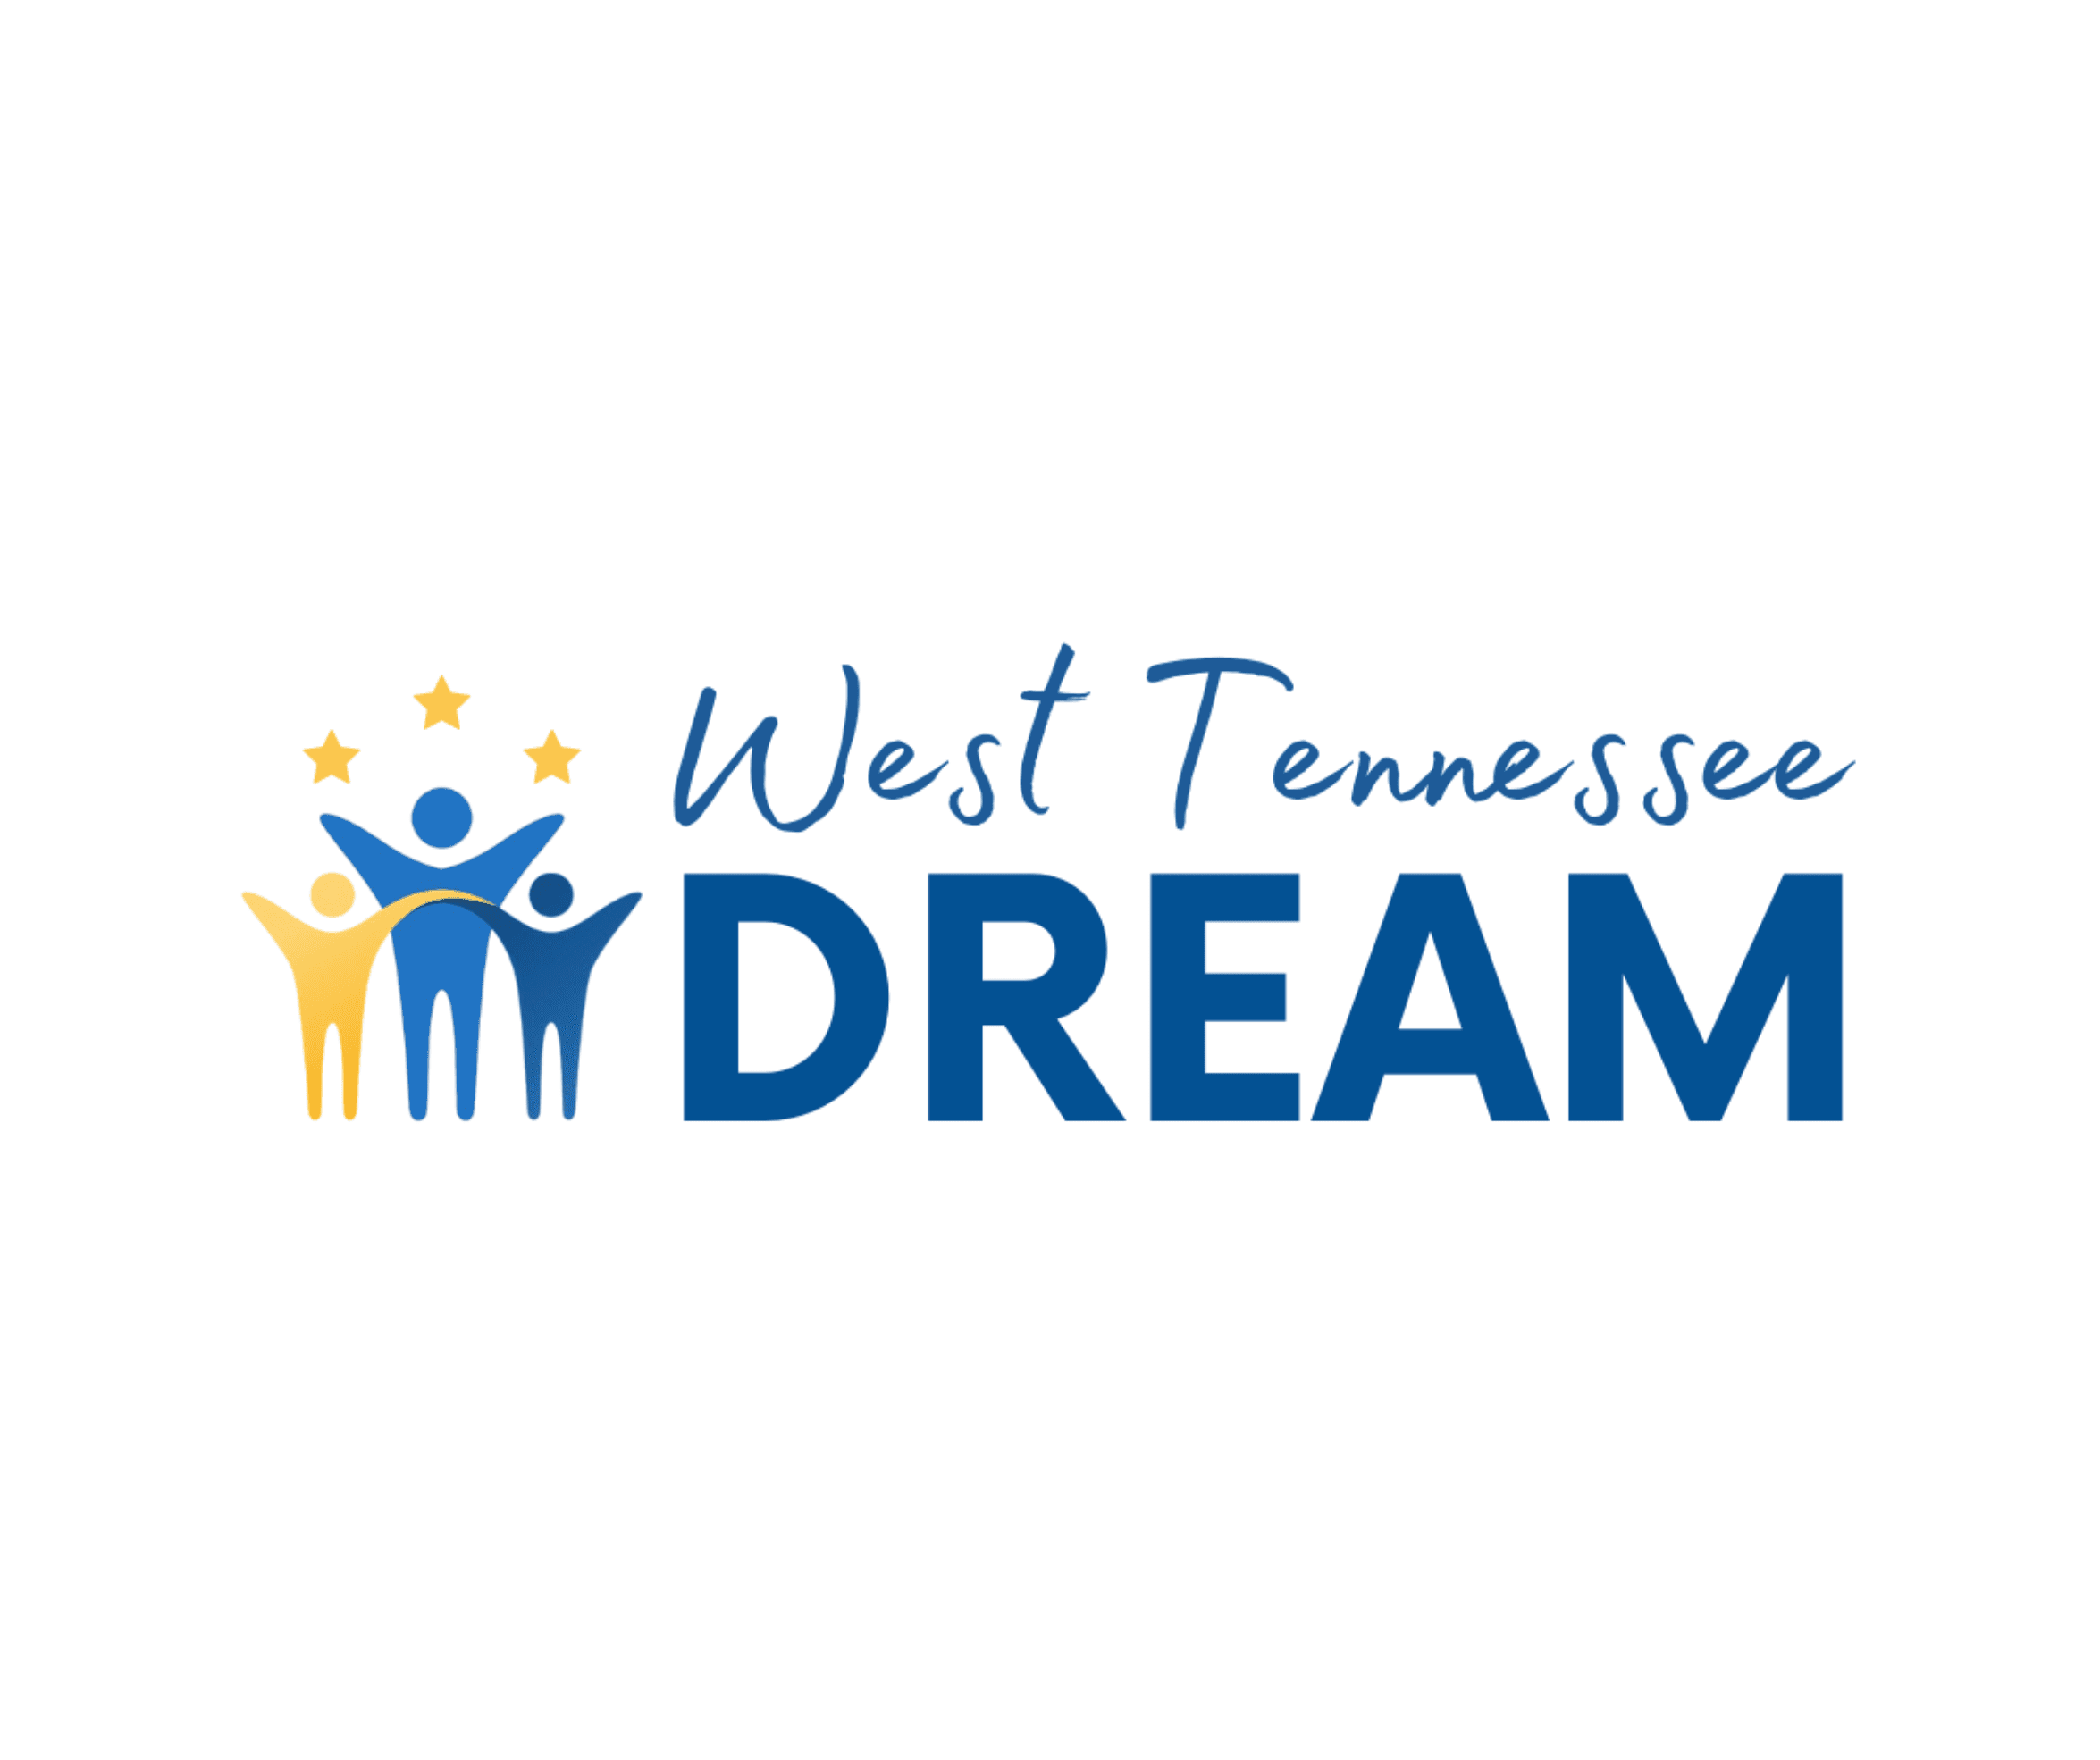 Regional Organizations Propose West Tennessee DREAM Initiative Through Unprecedented Partnership